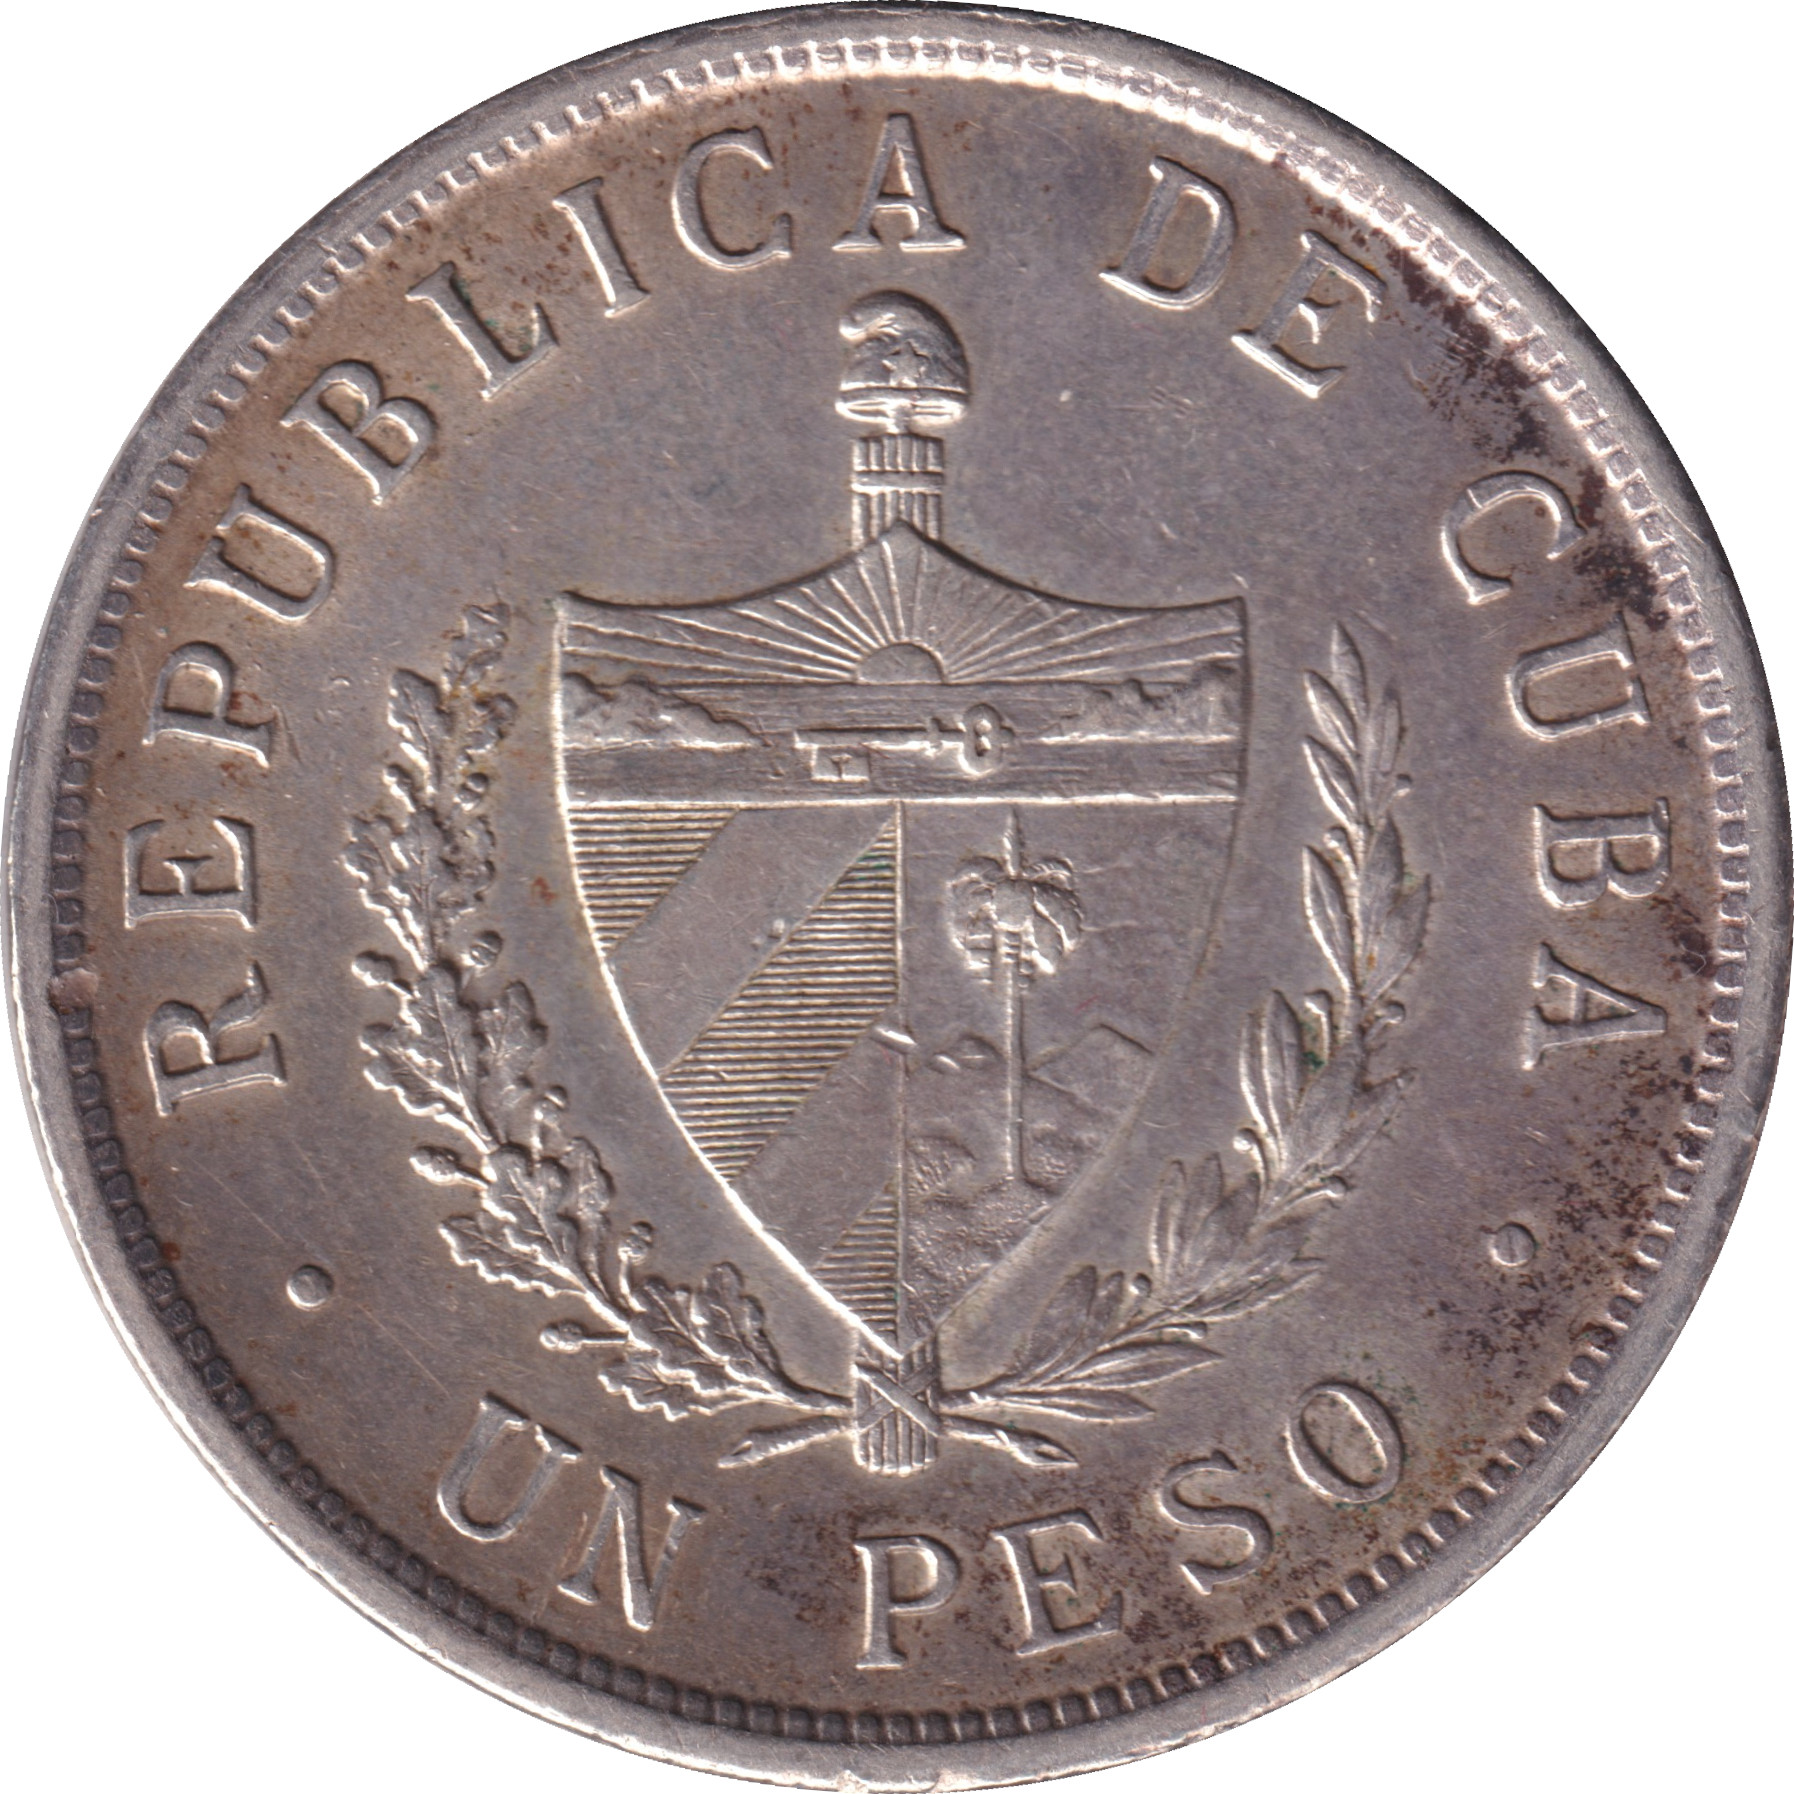 1 peso - Etoile